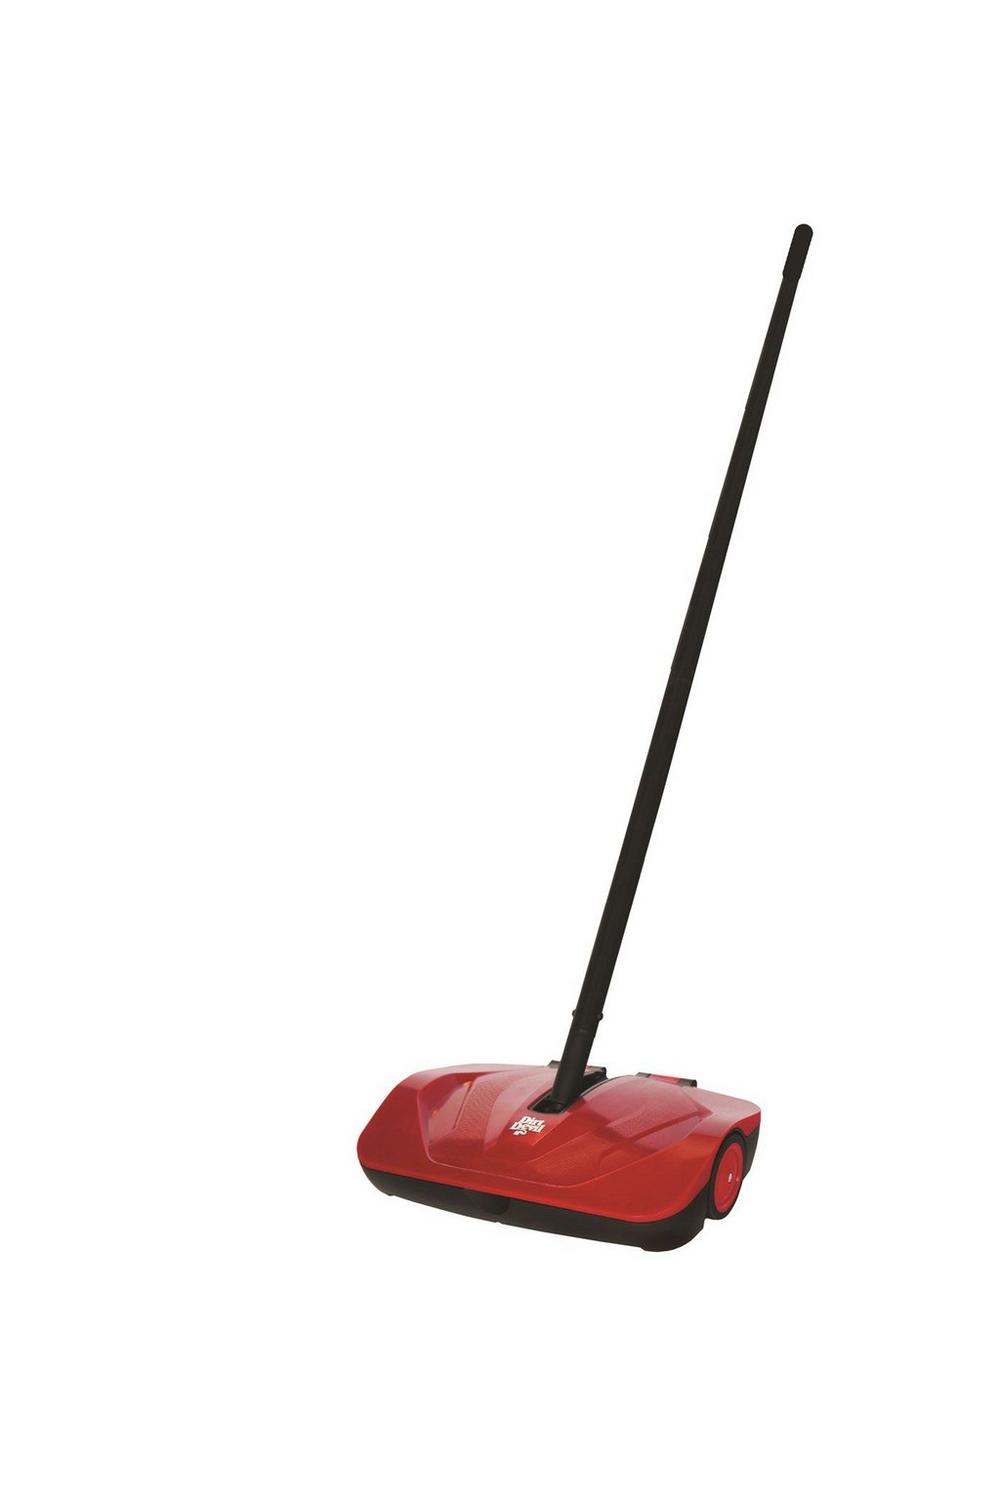 Simpli-Sweep Push Sweeper1